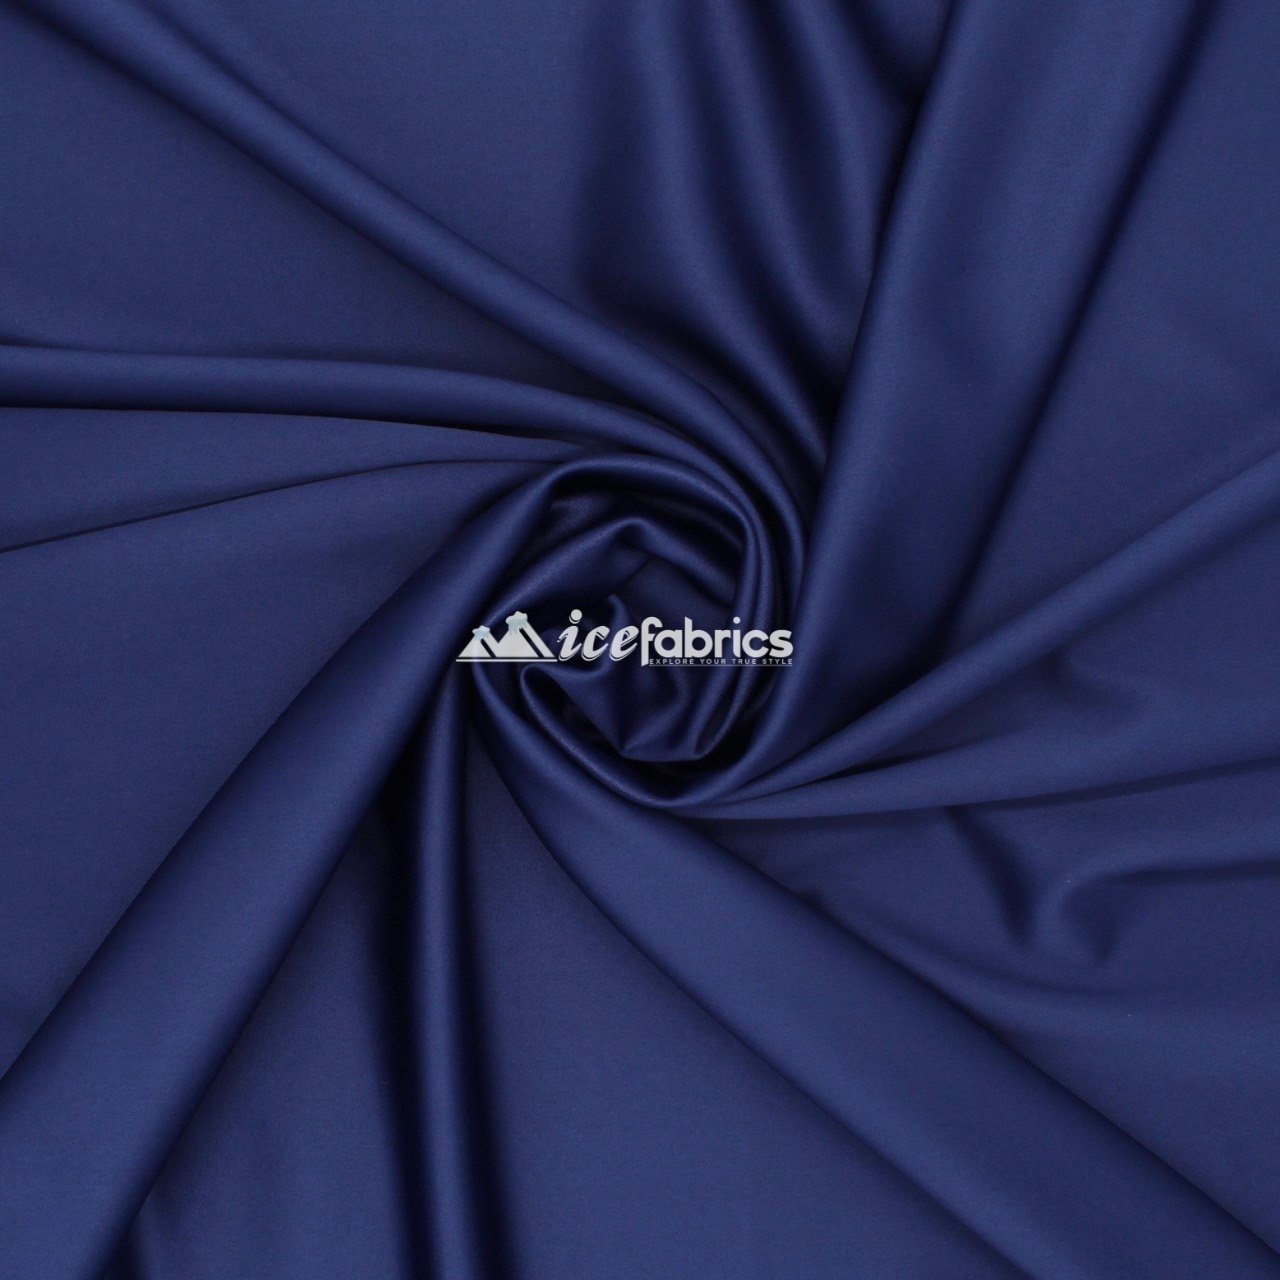 Thick Silky Armani %3 Stretch Shiny Satin Fabric By The Roll (20 YARD)Satin FabricICEFABRICICE FABRICSNavy BlueBy The Roll (60" Wide)Thick Silky Armani %3 Stretch Shiny Satin Fabric By The Roll (20 YARD) ICEFABRIC